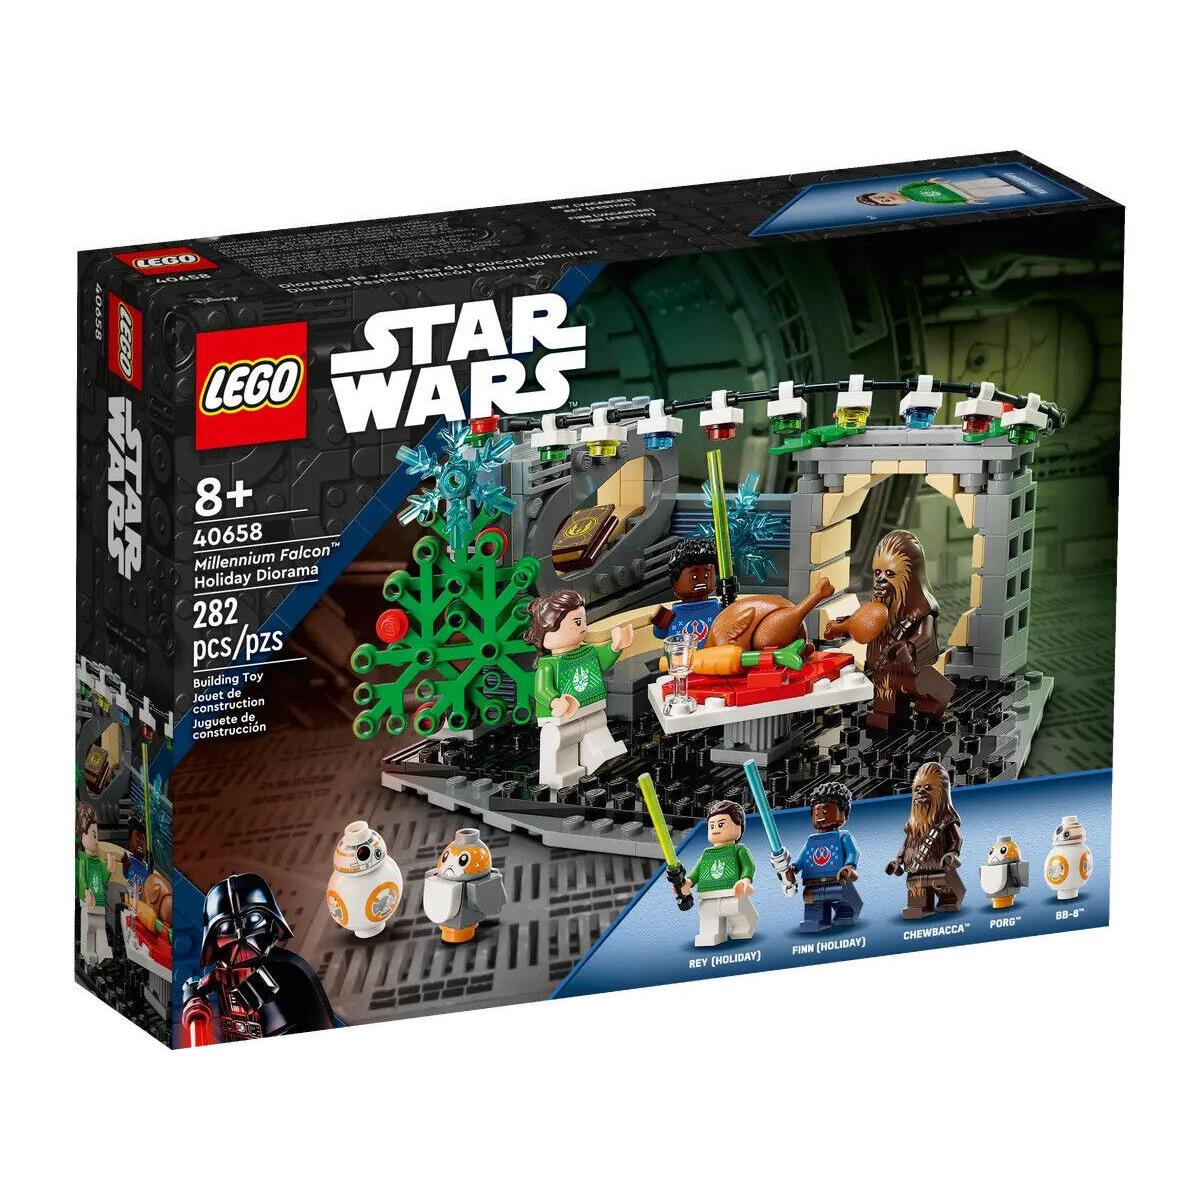 Lego Star Wars Millennium Falcon Holiday Diorama 40658 282 Pieces Retired - Red